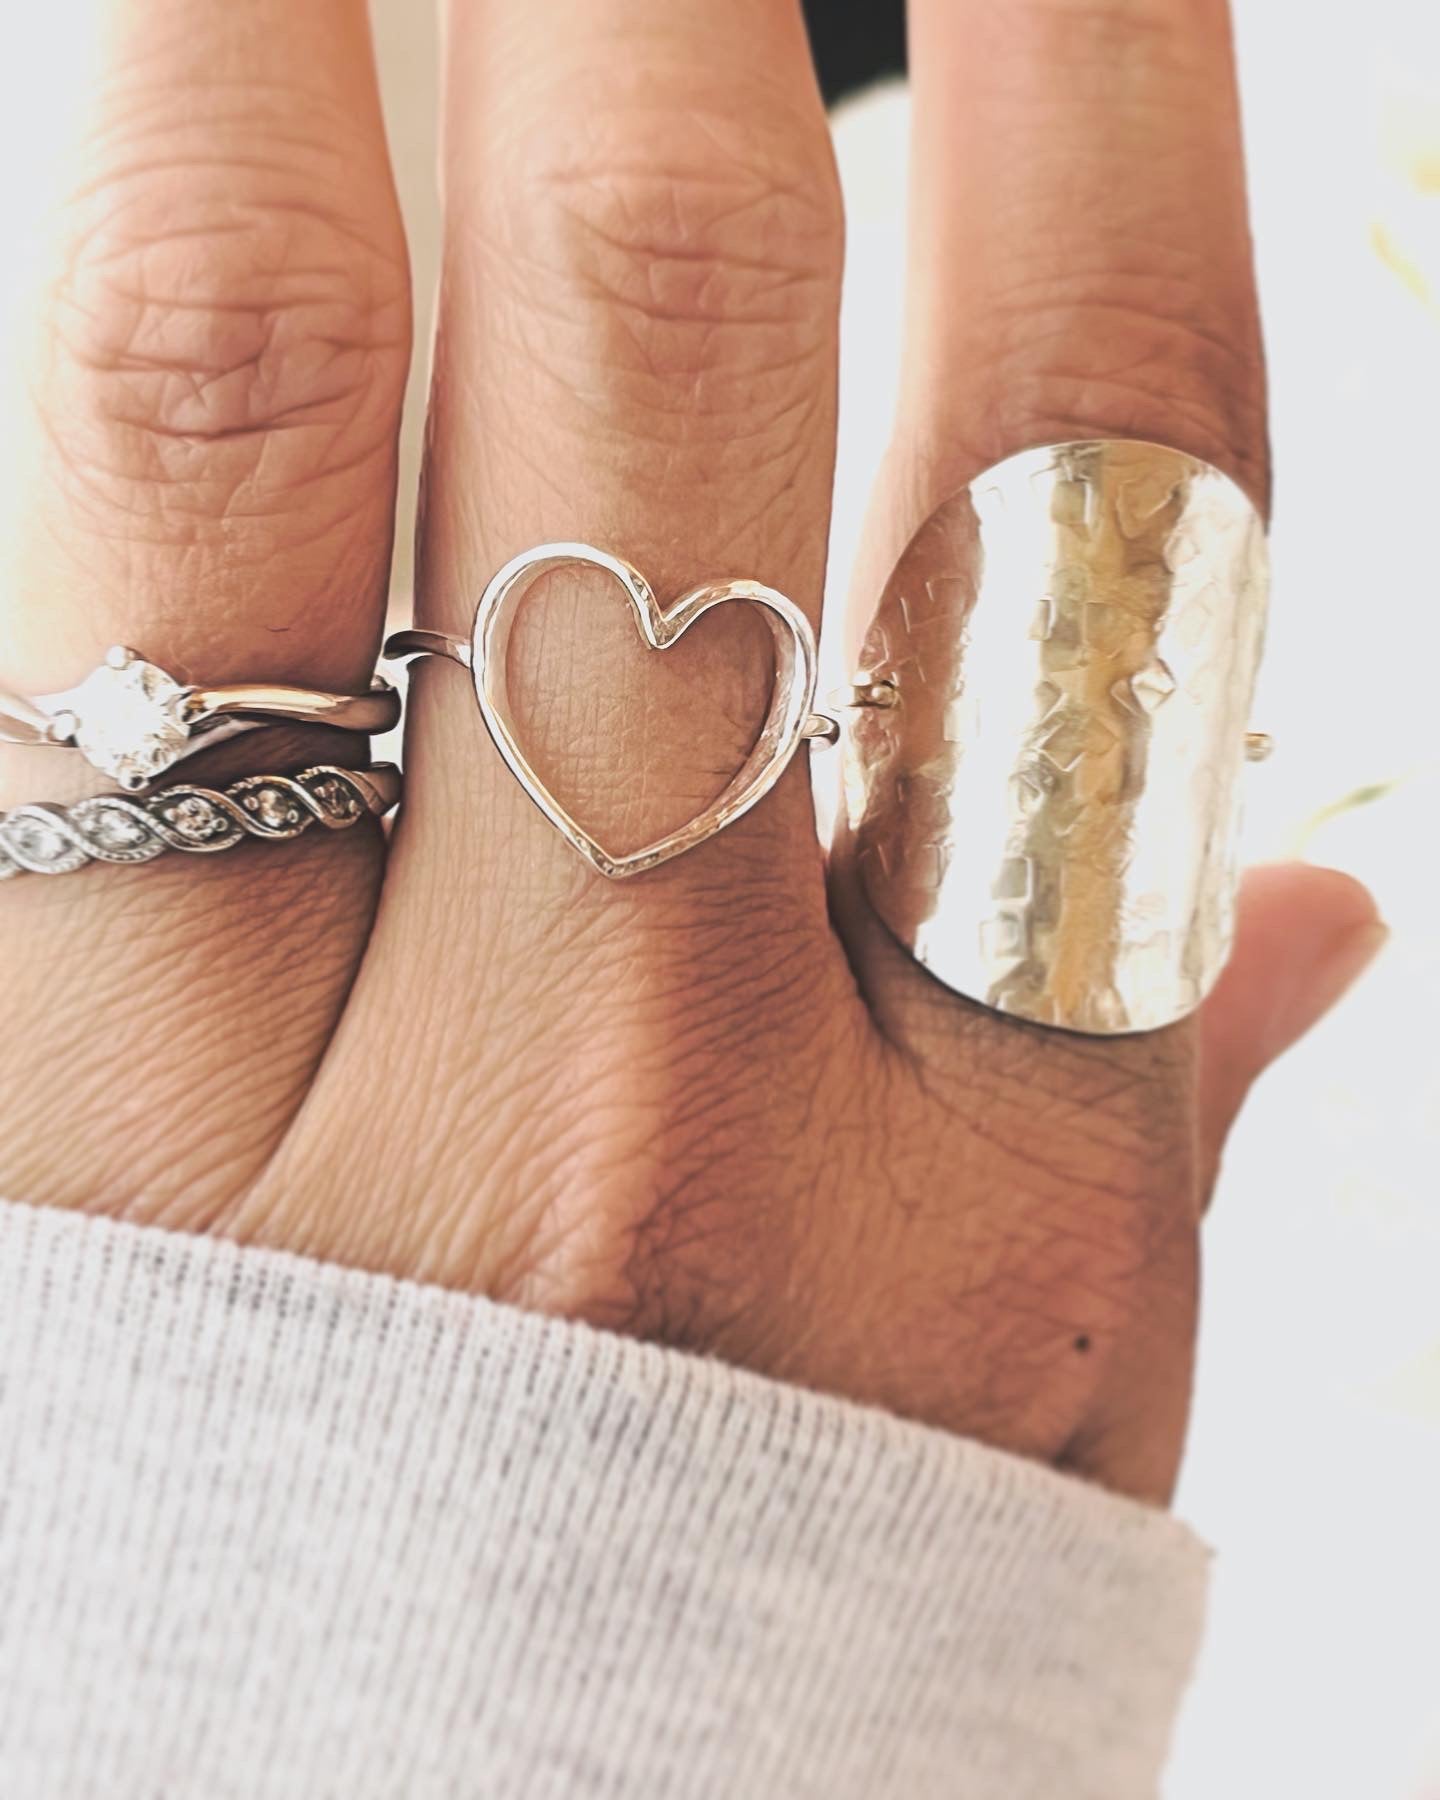 Open Heart Ring, Heart Ring, Silver Heart Ring